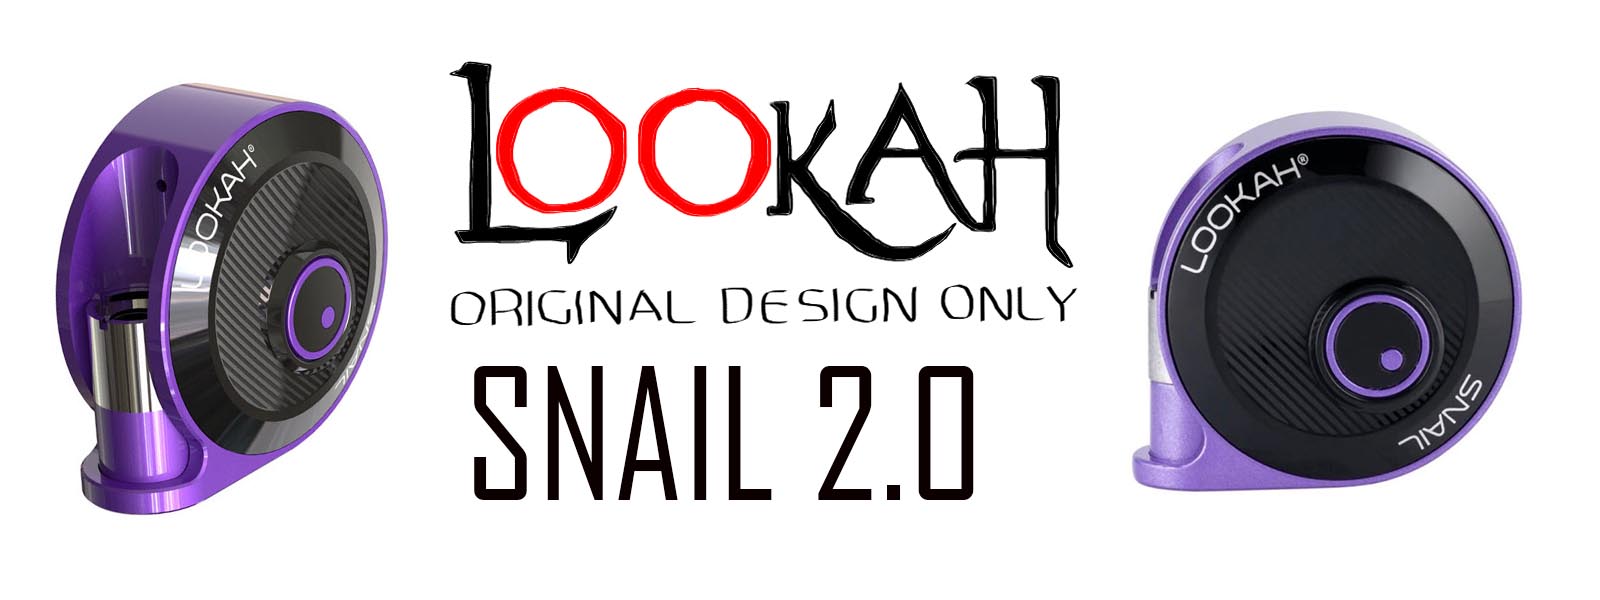 Lookah Snail 2.0 available at Marketplace V